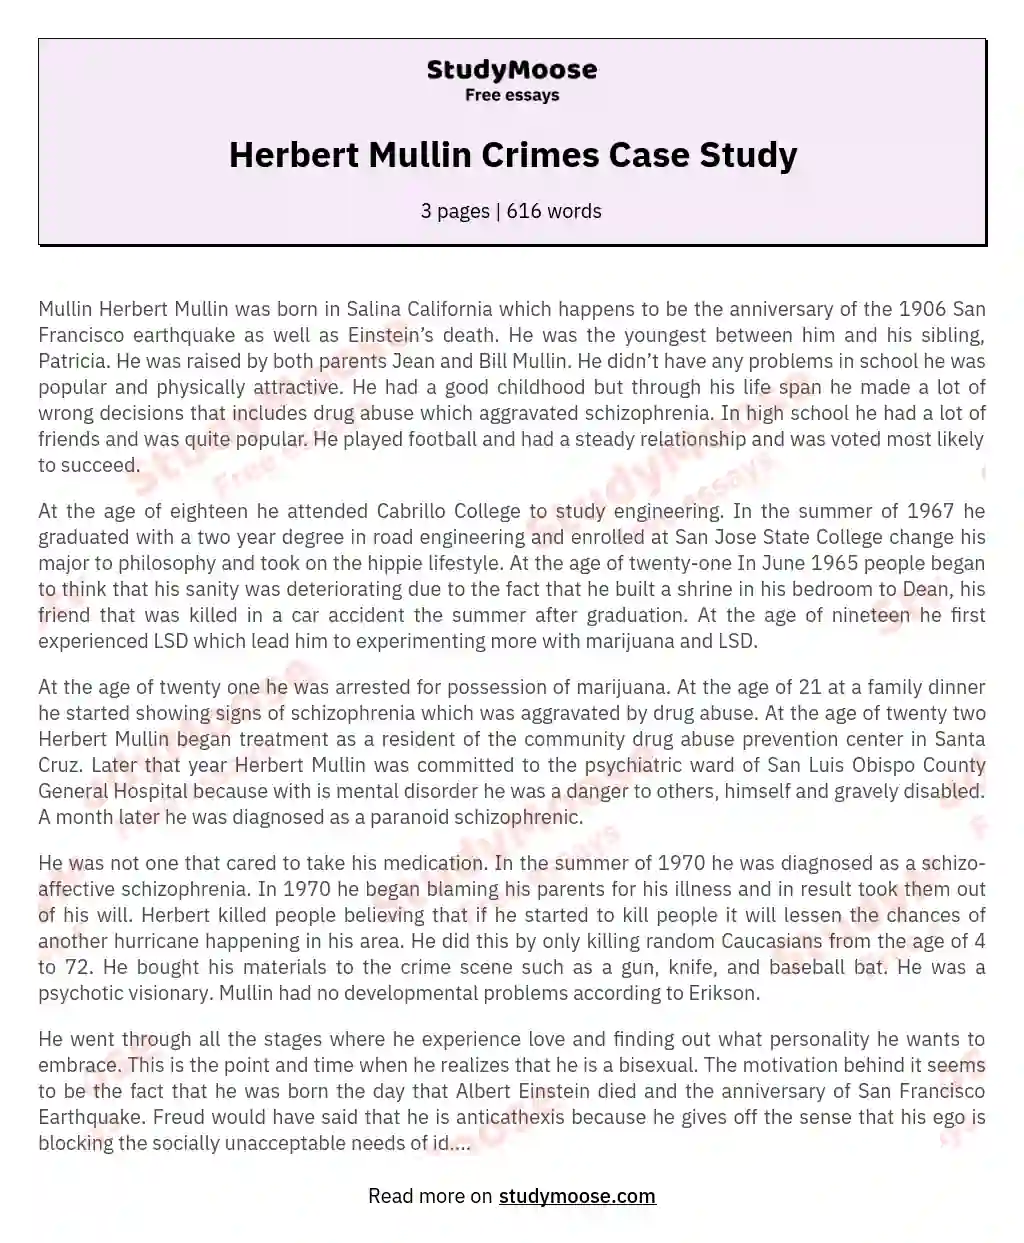 Herbert Mullin Crimes Case Study essay